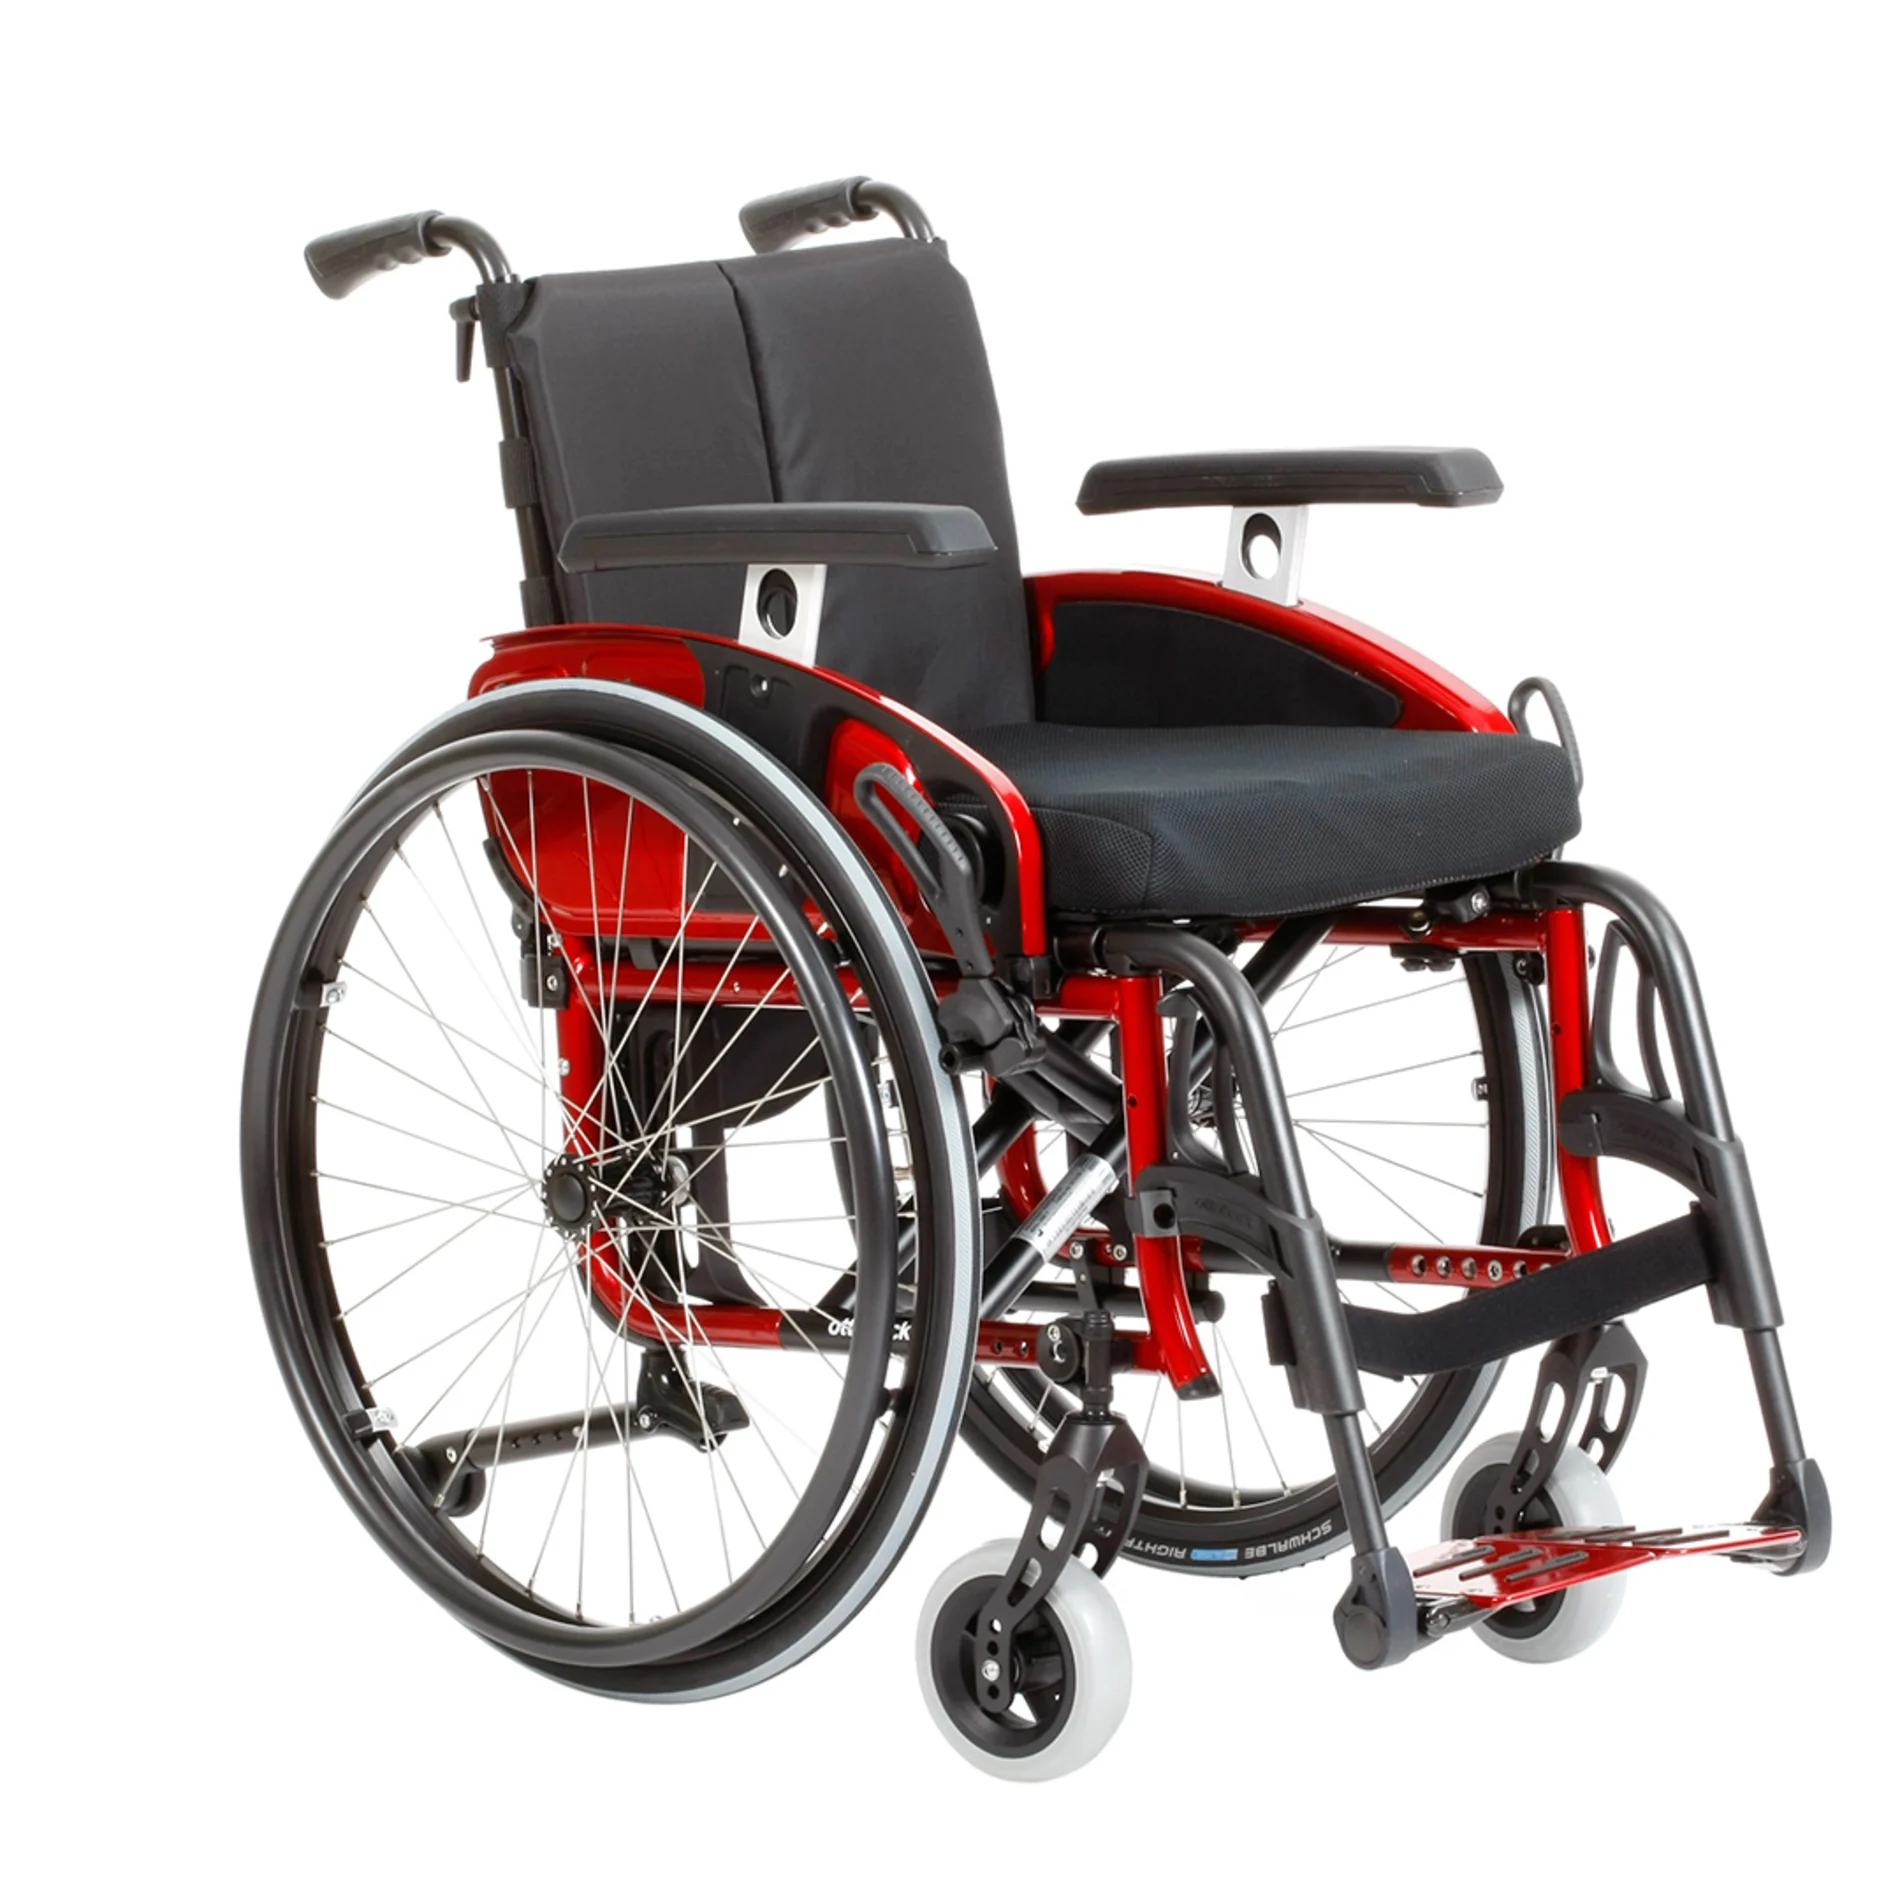 FirstSpiritExport,OBISCM-1557,web_site,mobility_1,wheelchairs,avantgarde_cv